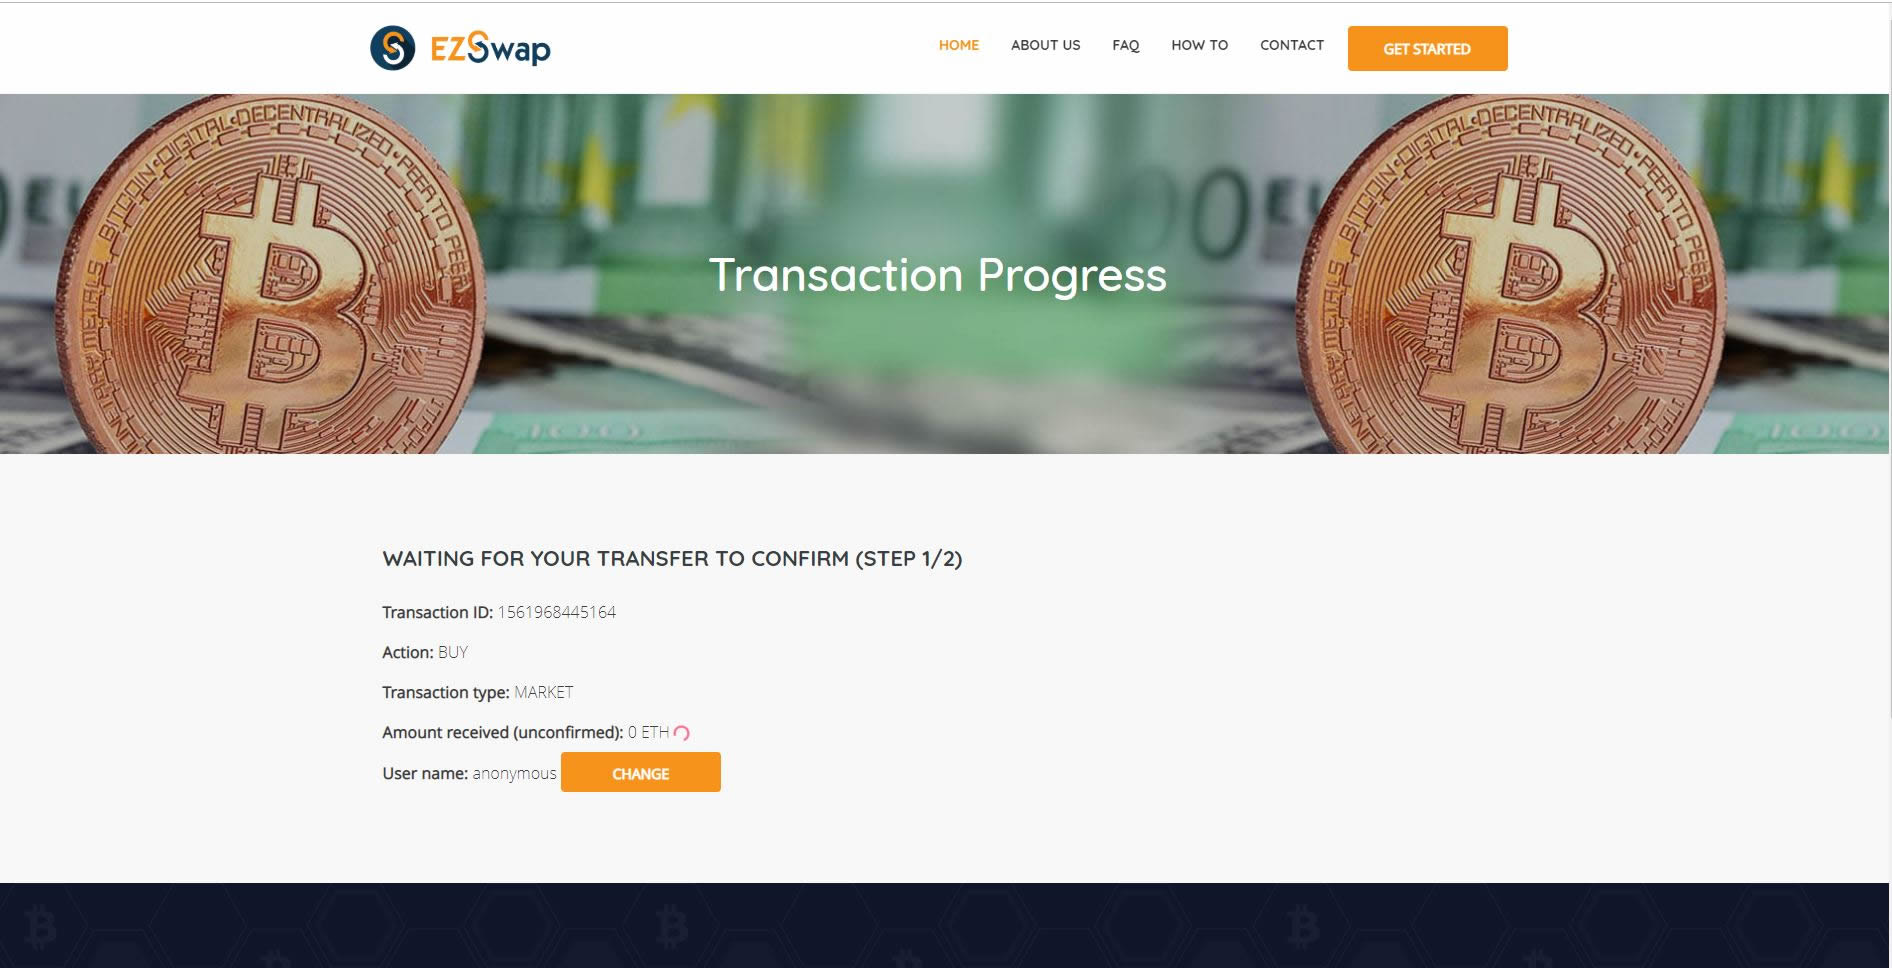 Transaction progress page